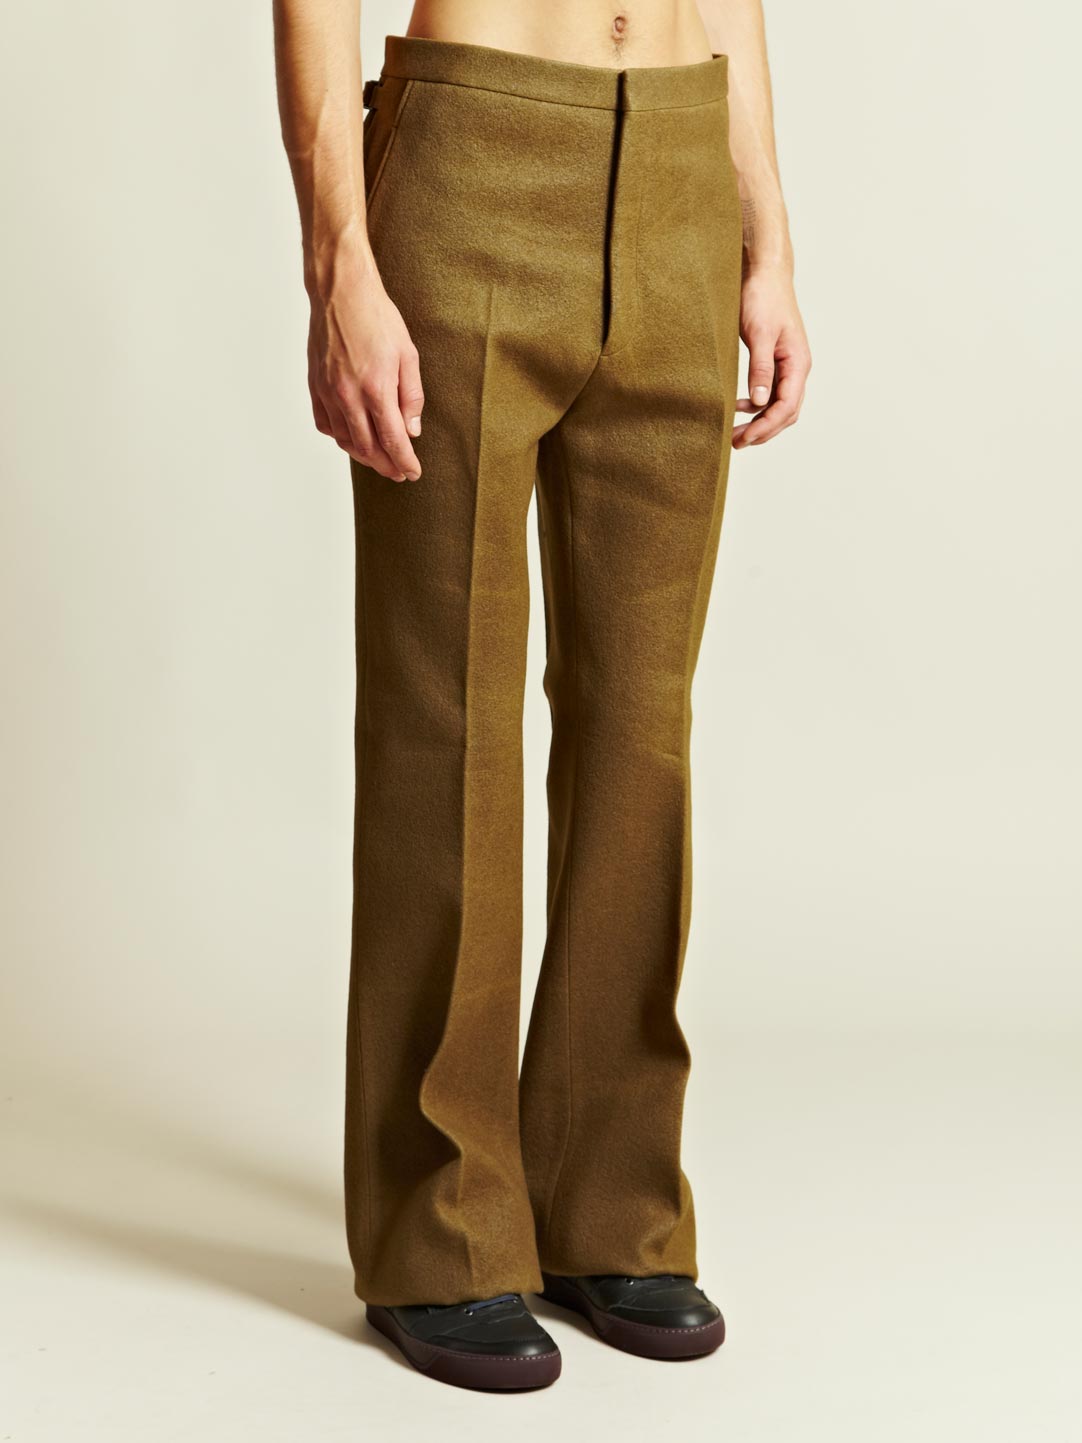 Lanvin Lanvin Mens Large Flare Trousers in Natural for Men